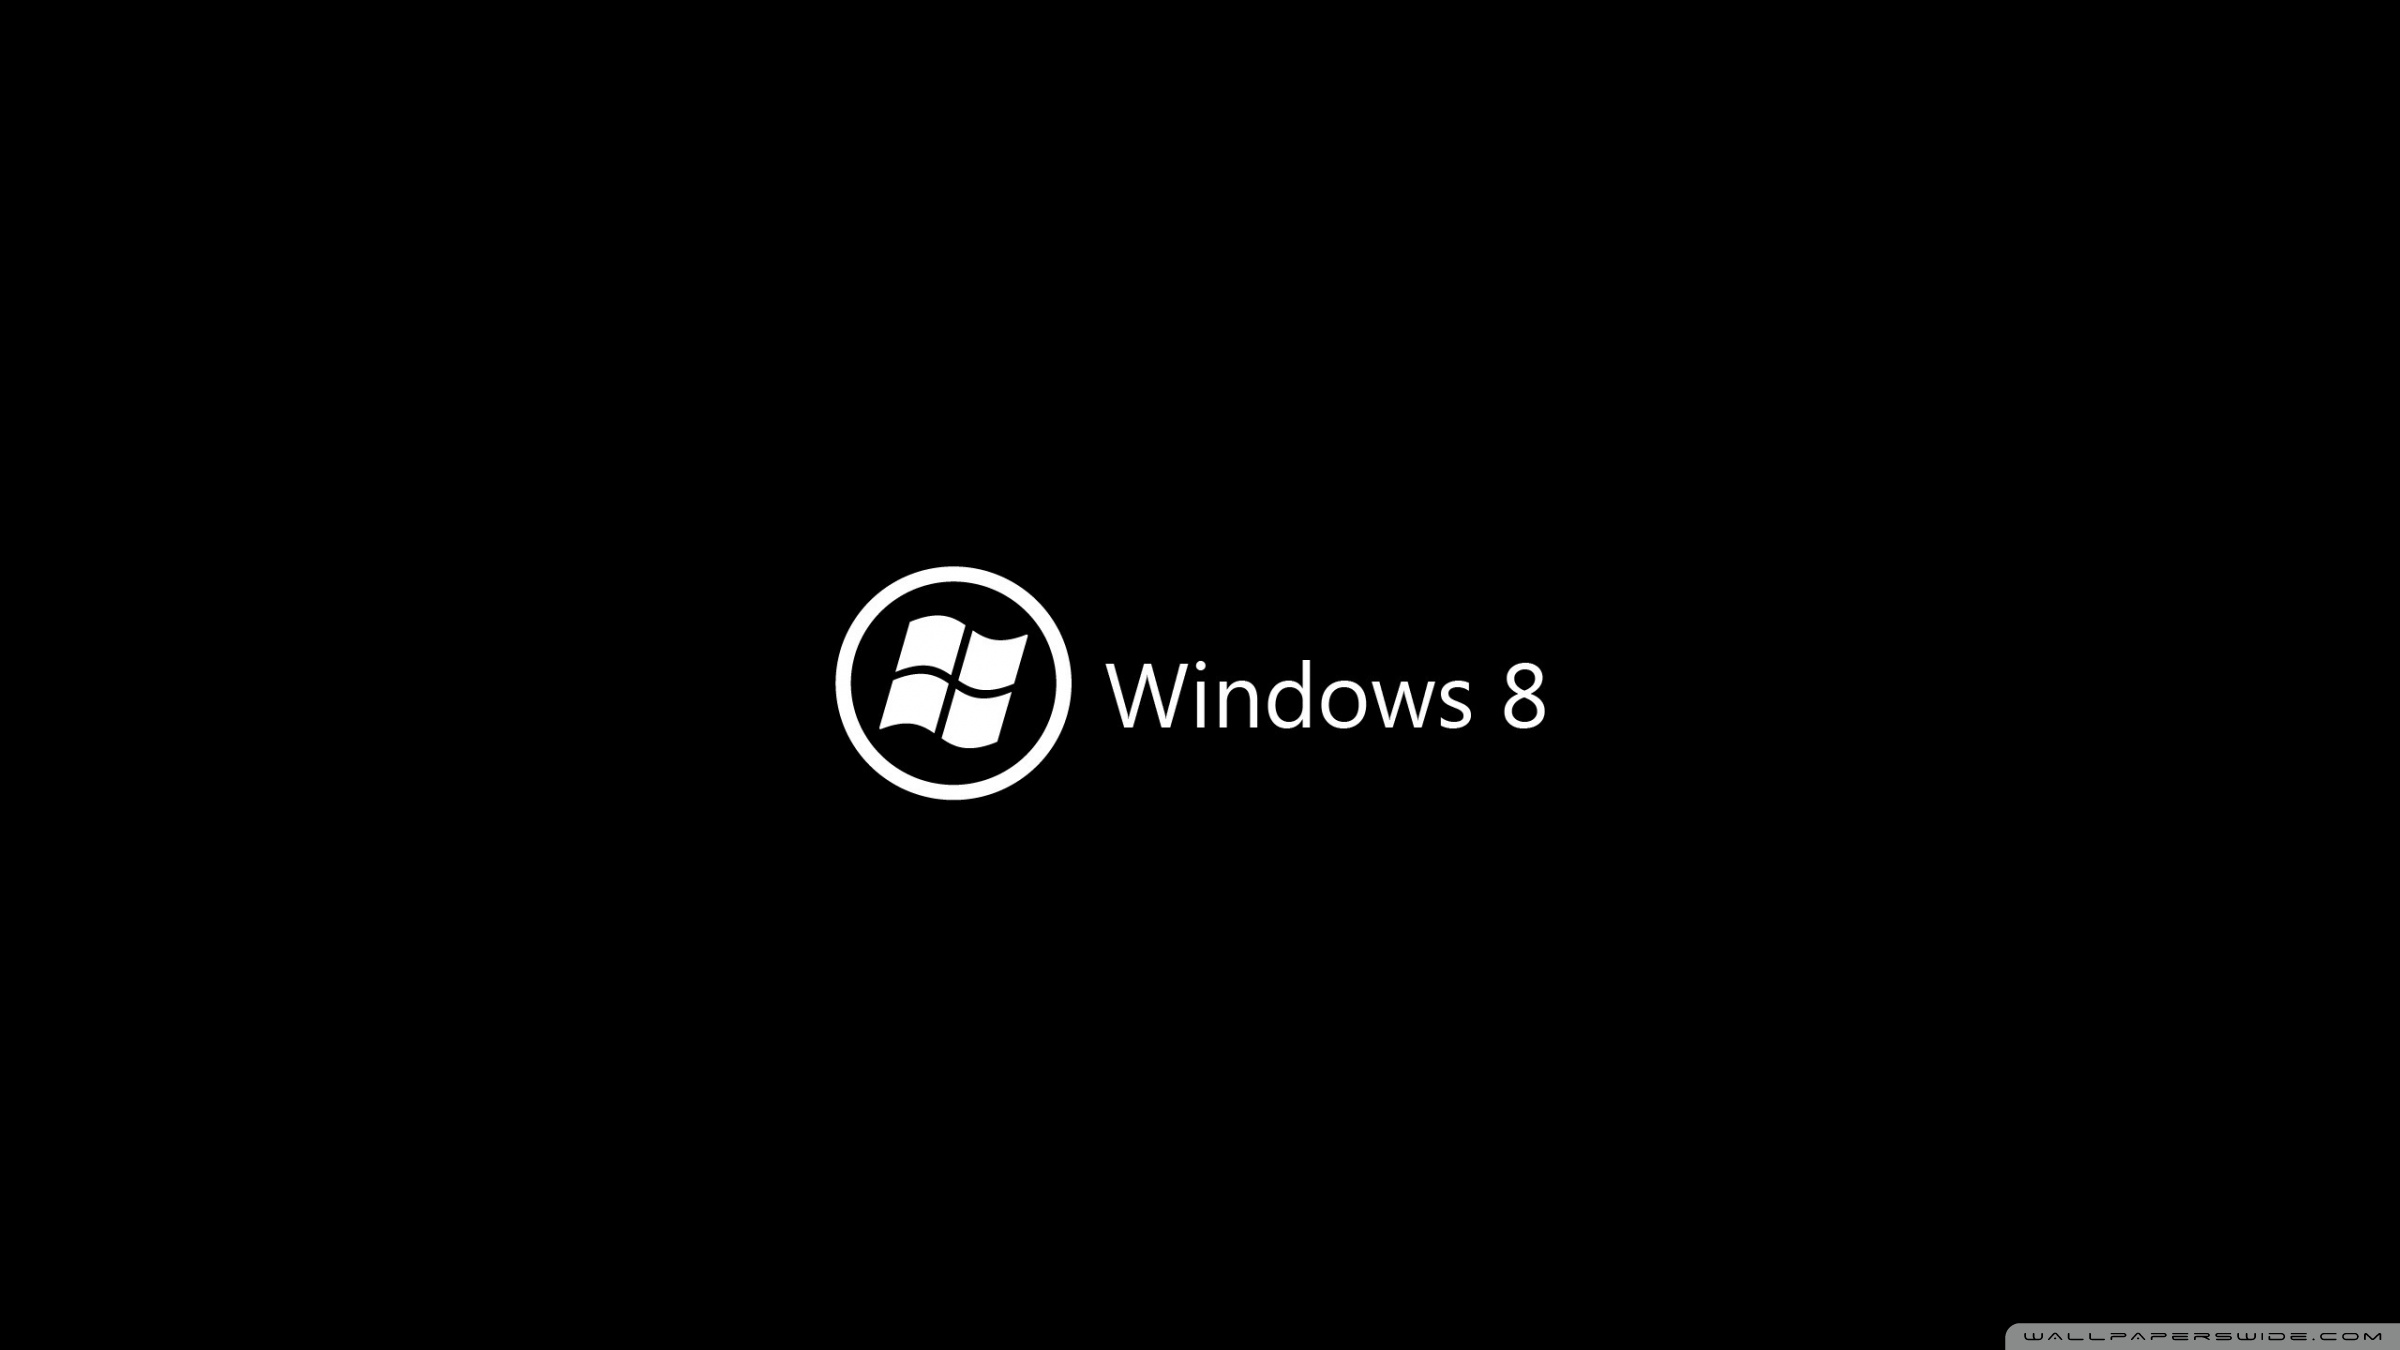 Windows 8 On Black HD desktop wallpaper : High Definition ...